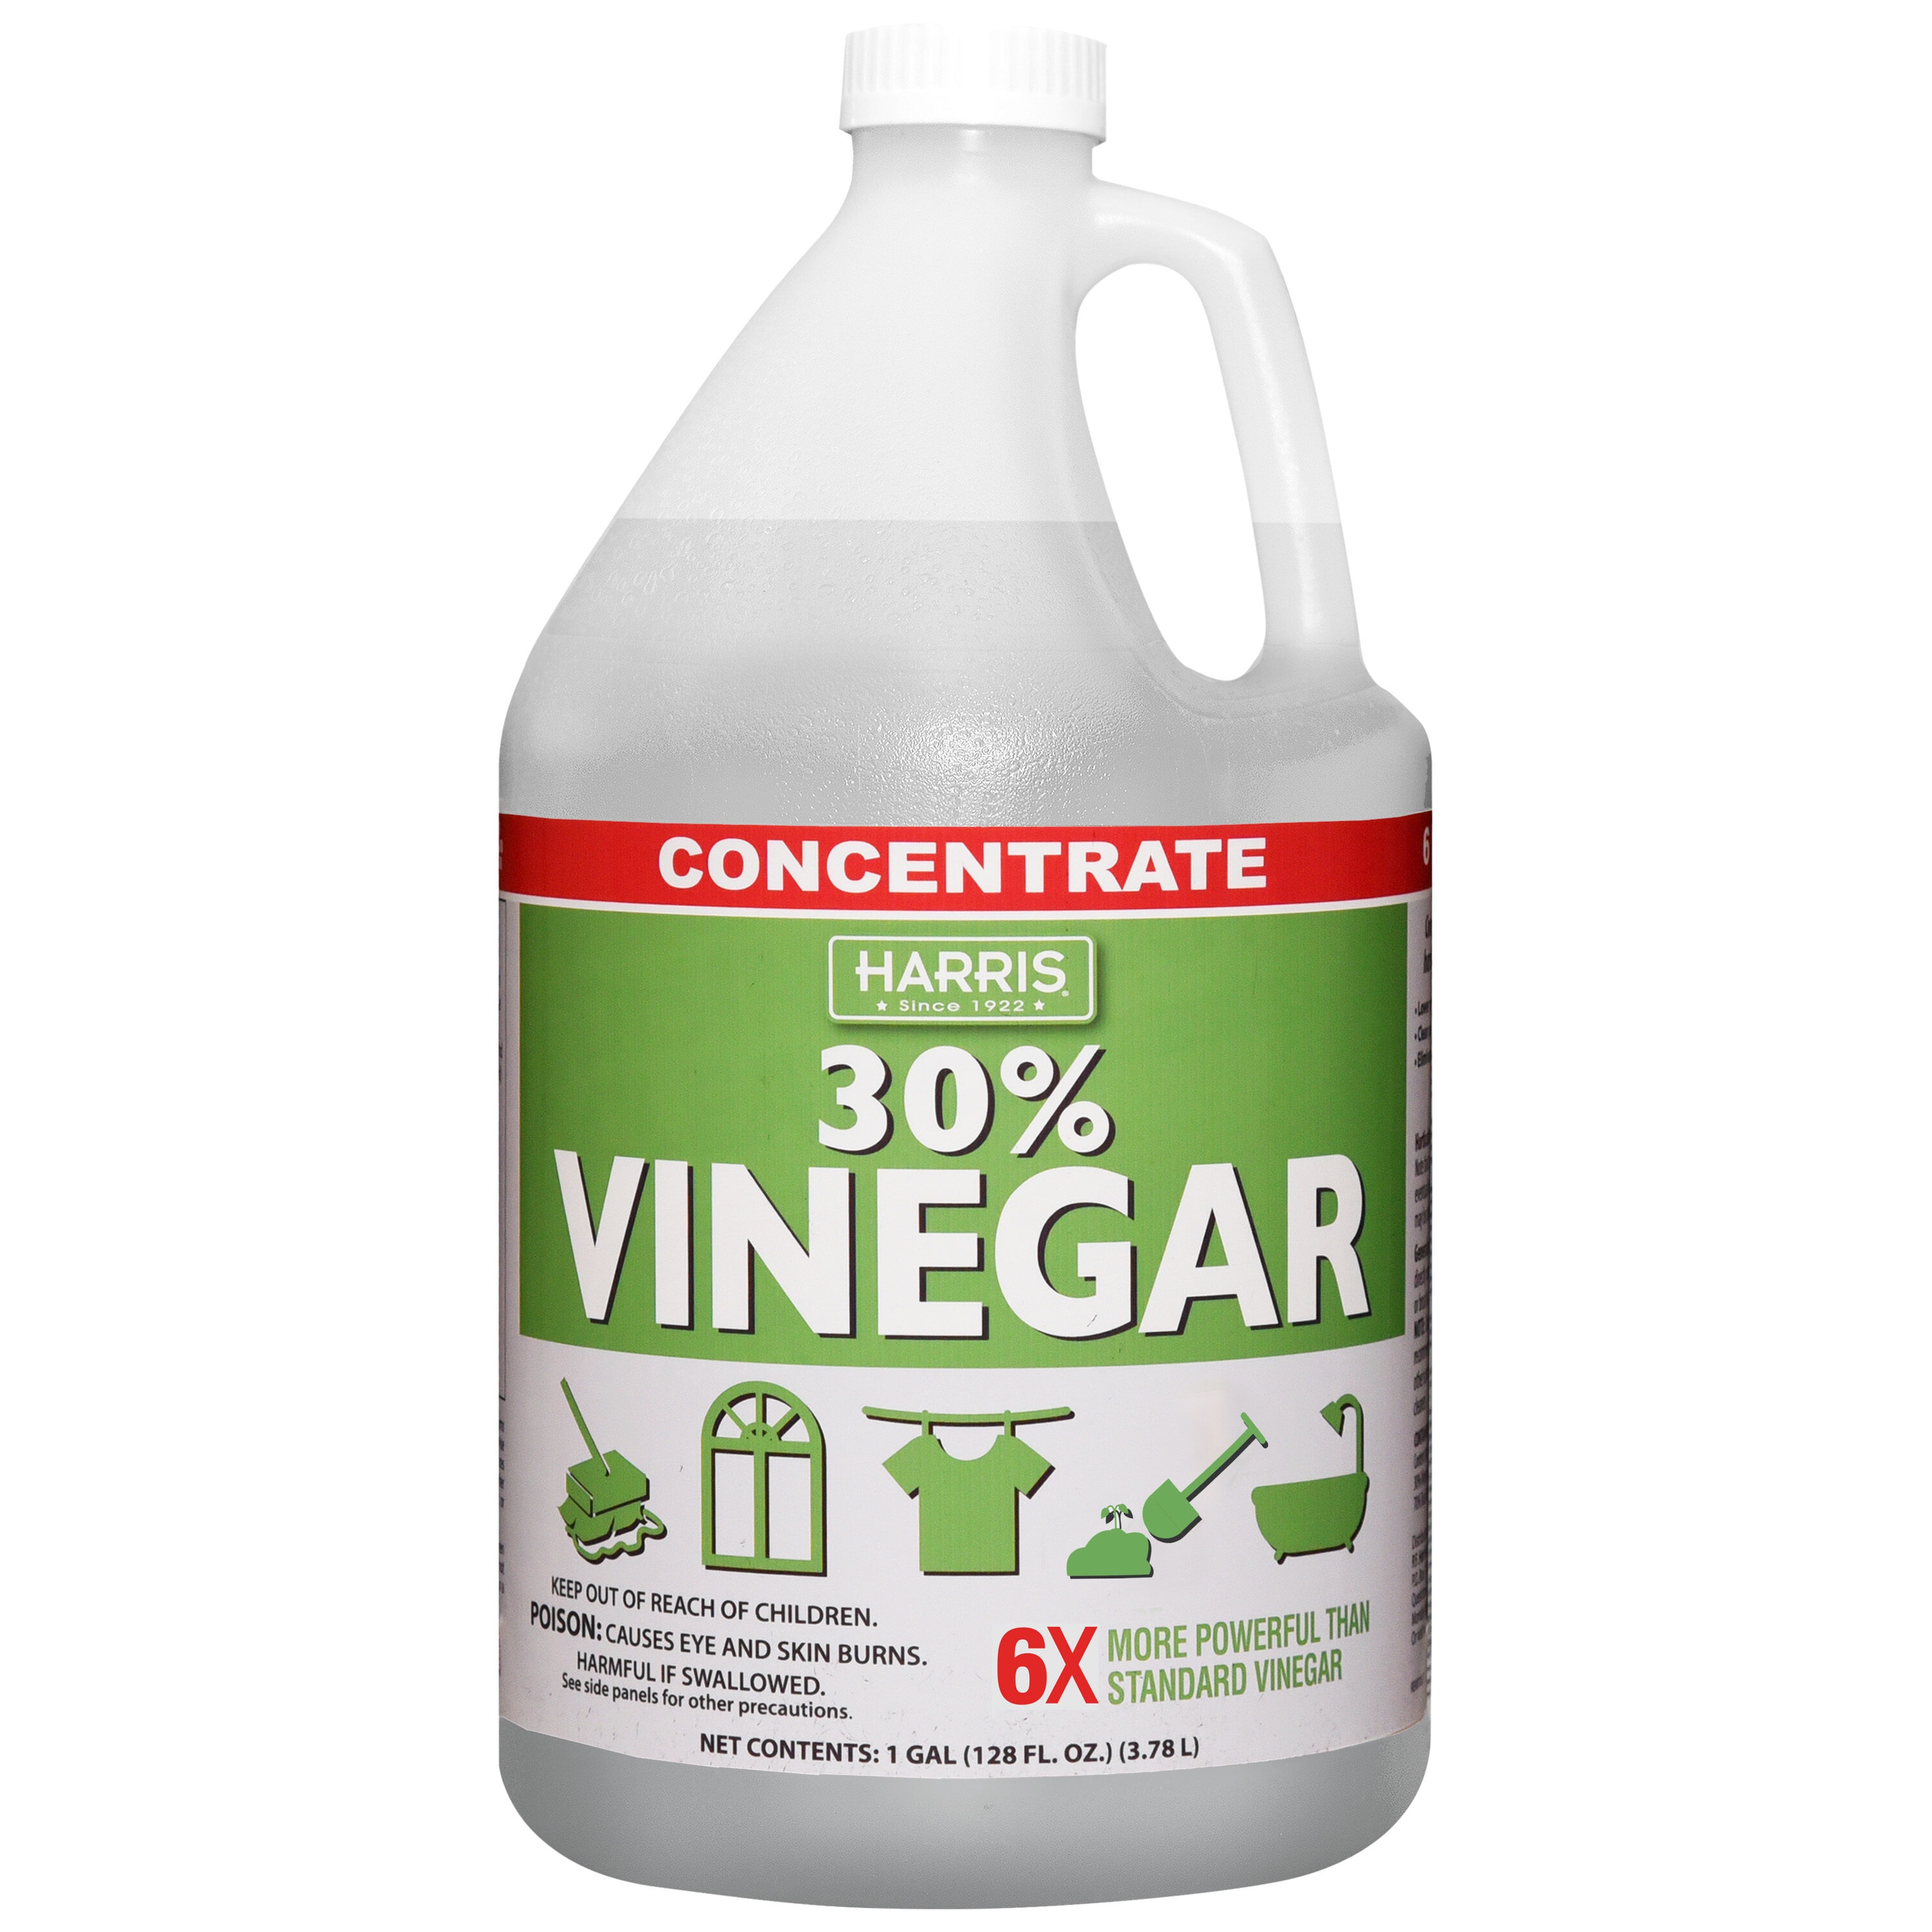 128 oz. Vinegar-Powered Tile Floor Cleaner with Lavender Scent